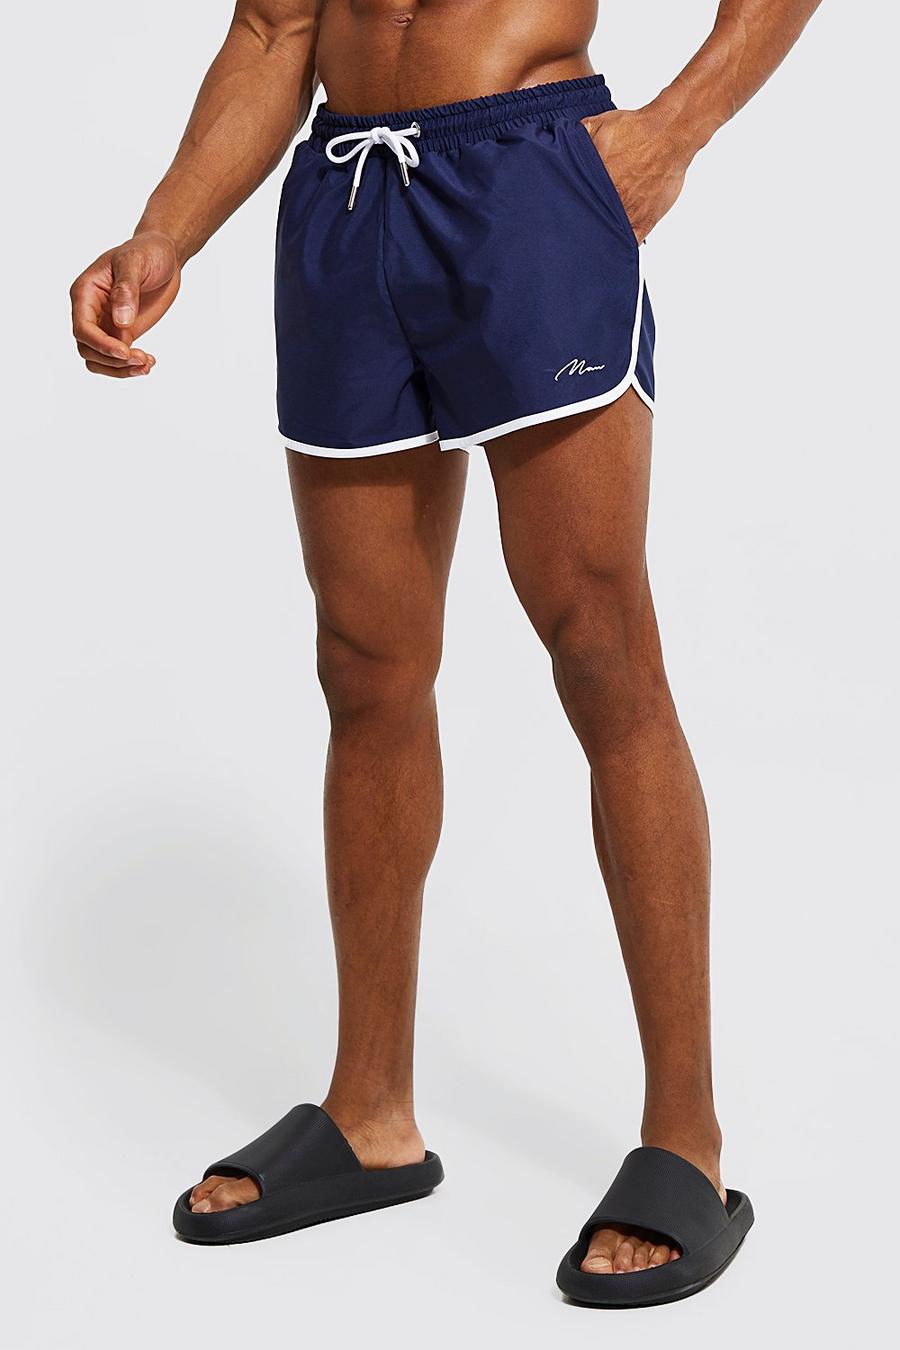 Navy blu oltremare שורט בגד ים בסגנון מכנסי ריצה עם חתימת Man מבד ממוחזר